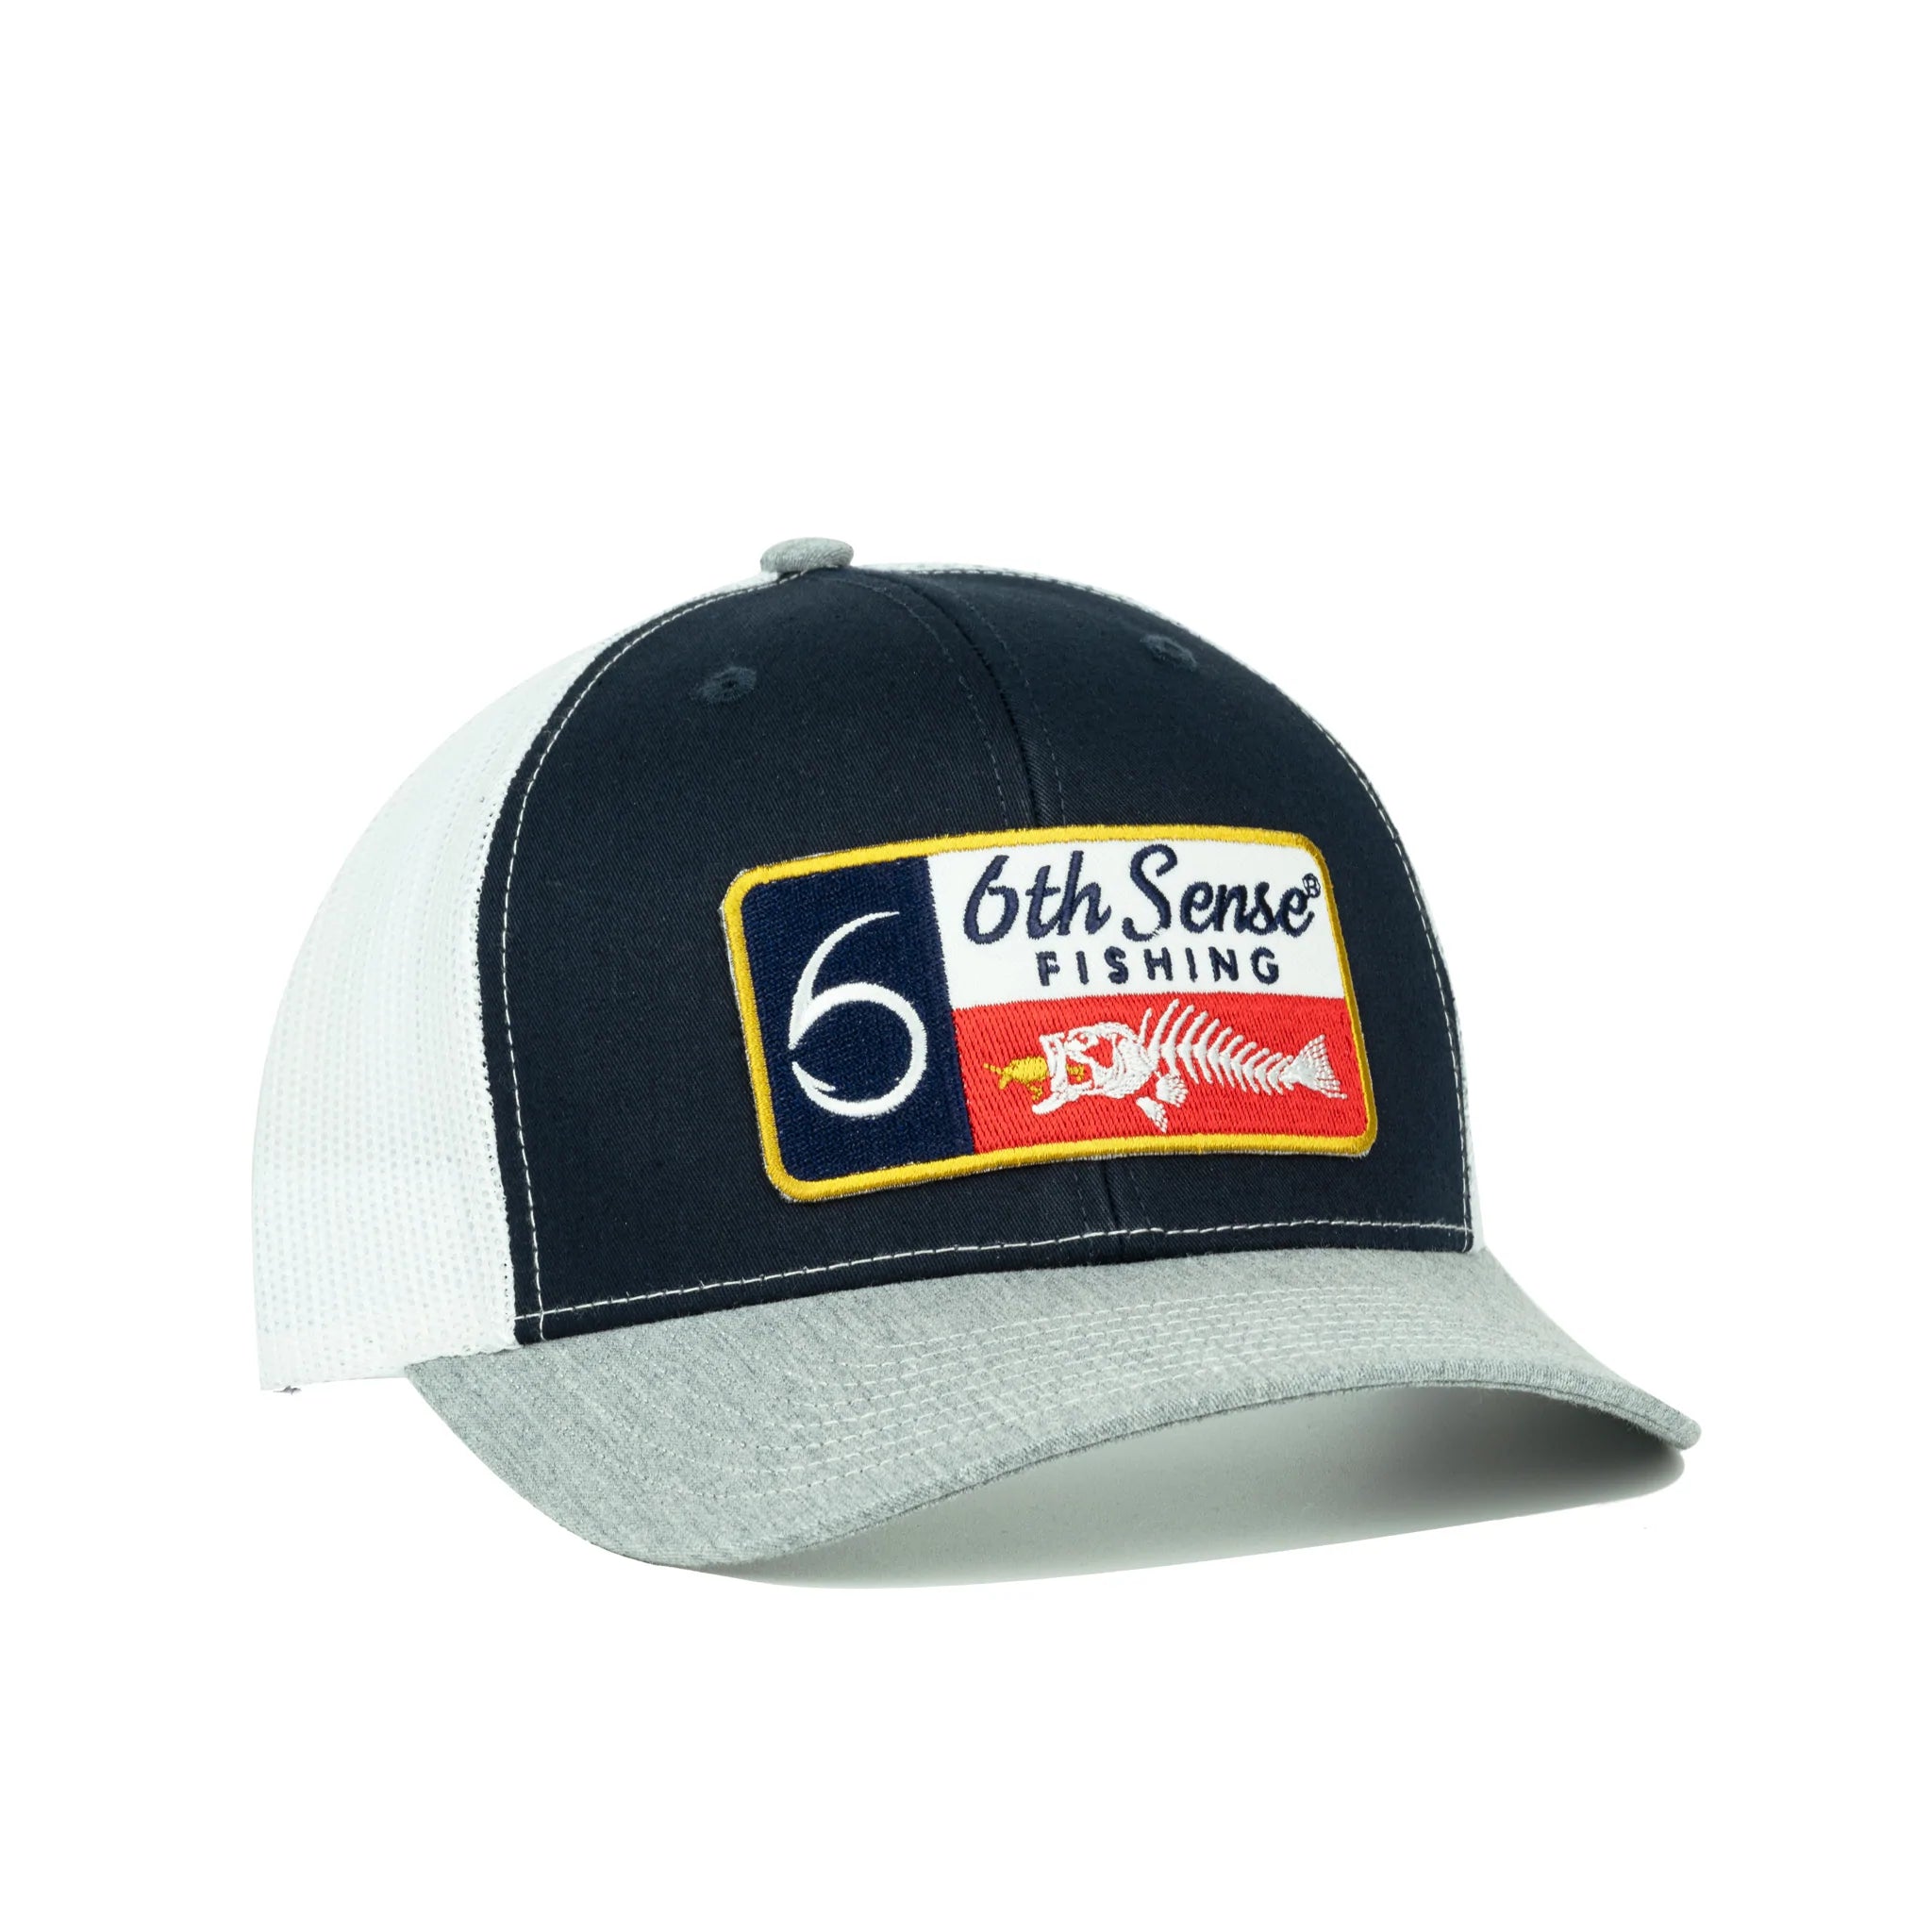 Buy texas-fishbones-gray-navy-white 6TH SENSE HATS